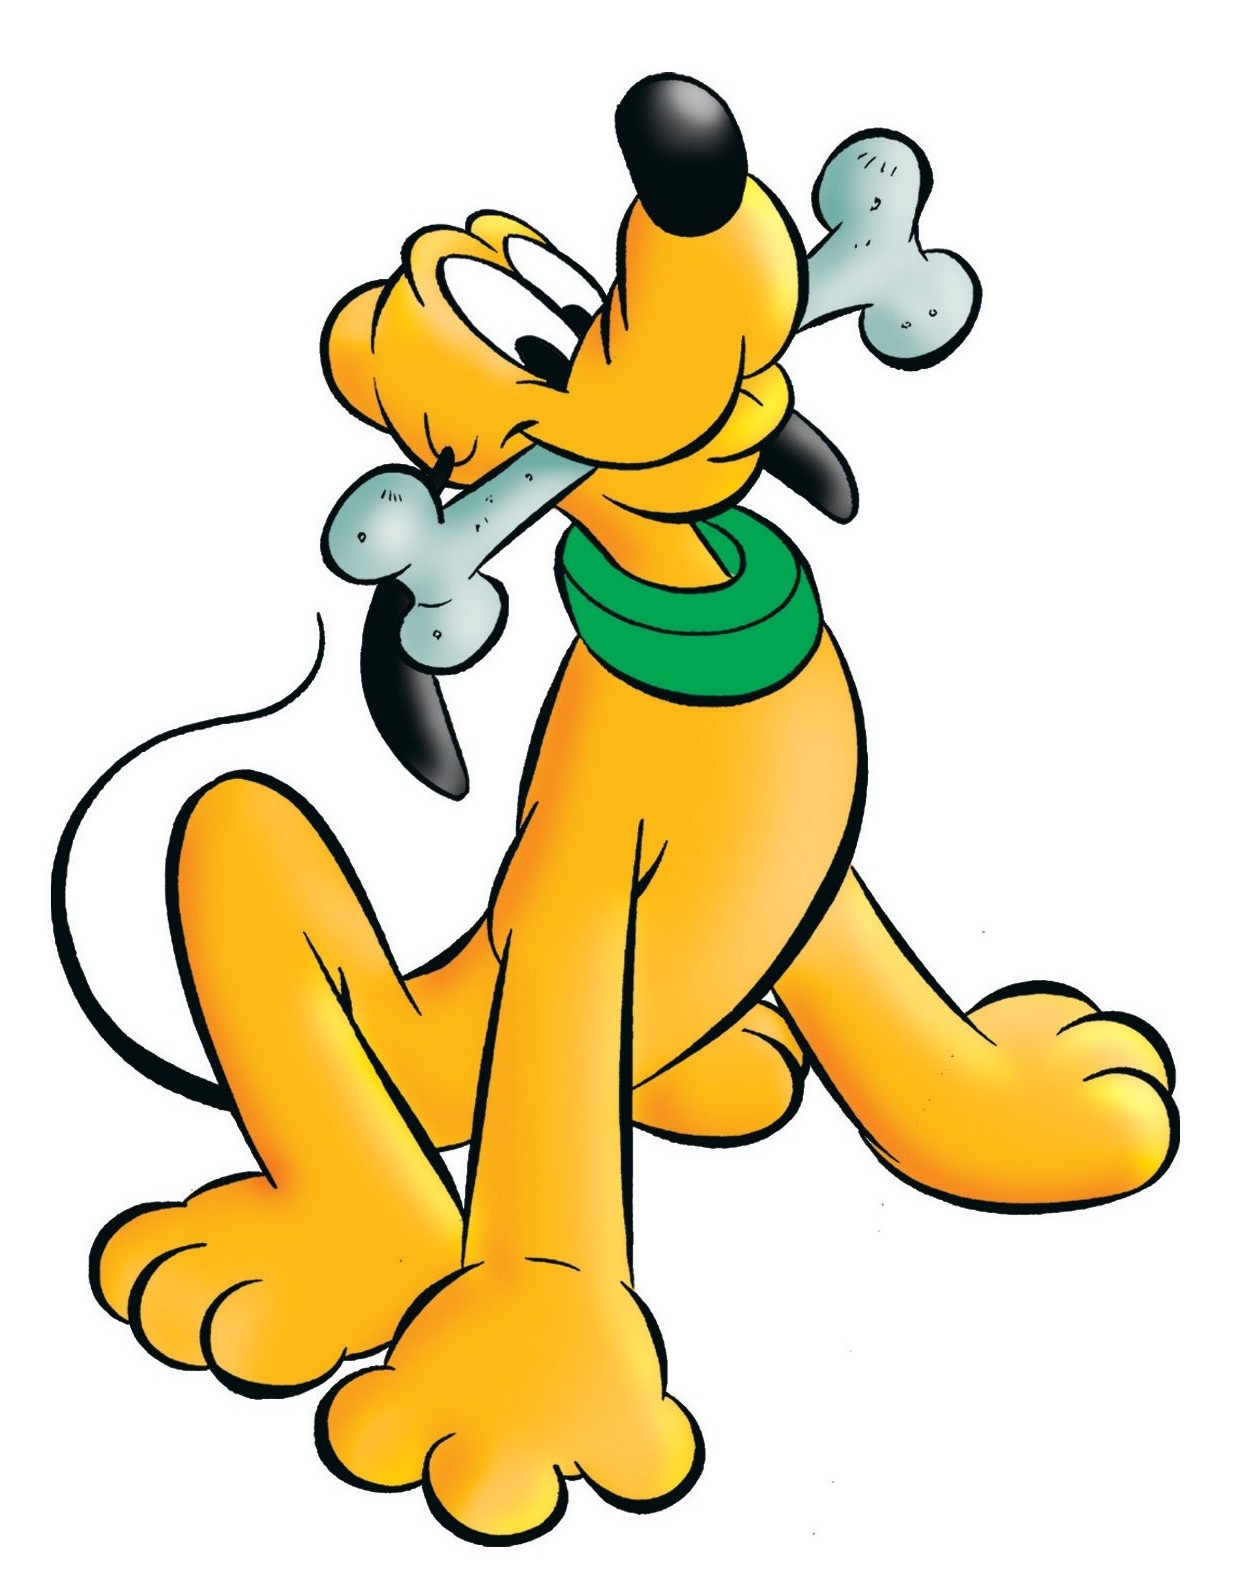 Beauty Of The New Cartoons: Pluto Dog is Colour Cartoons